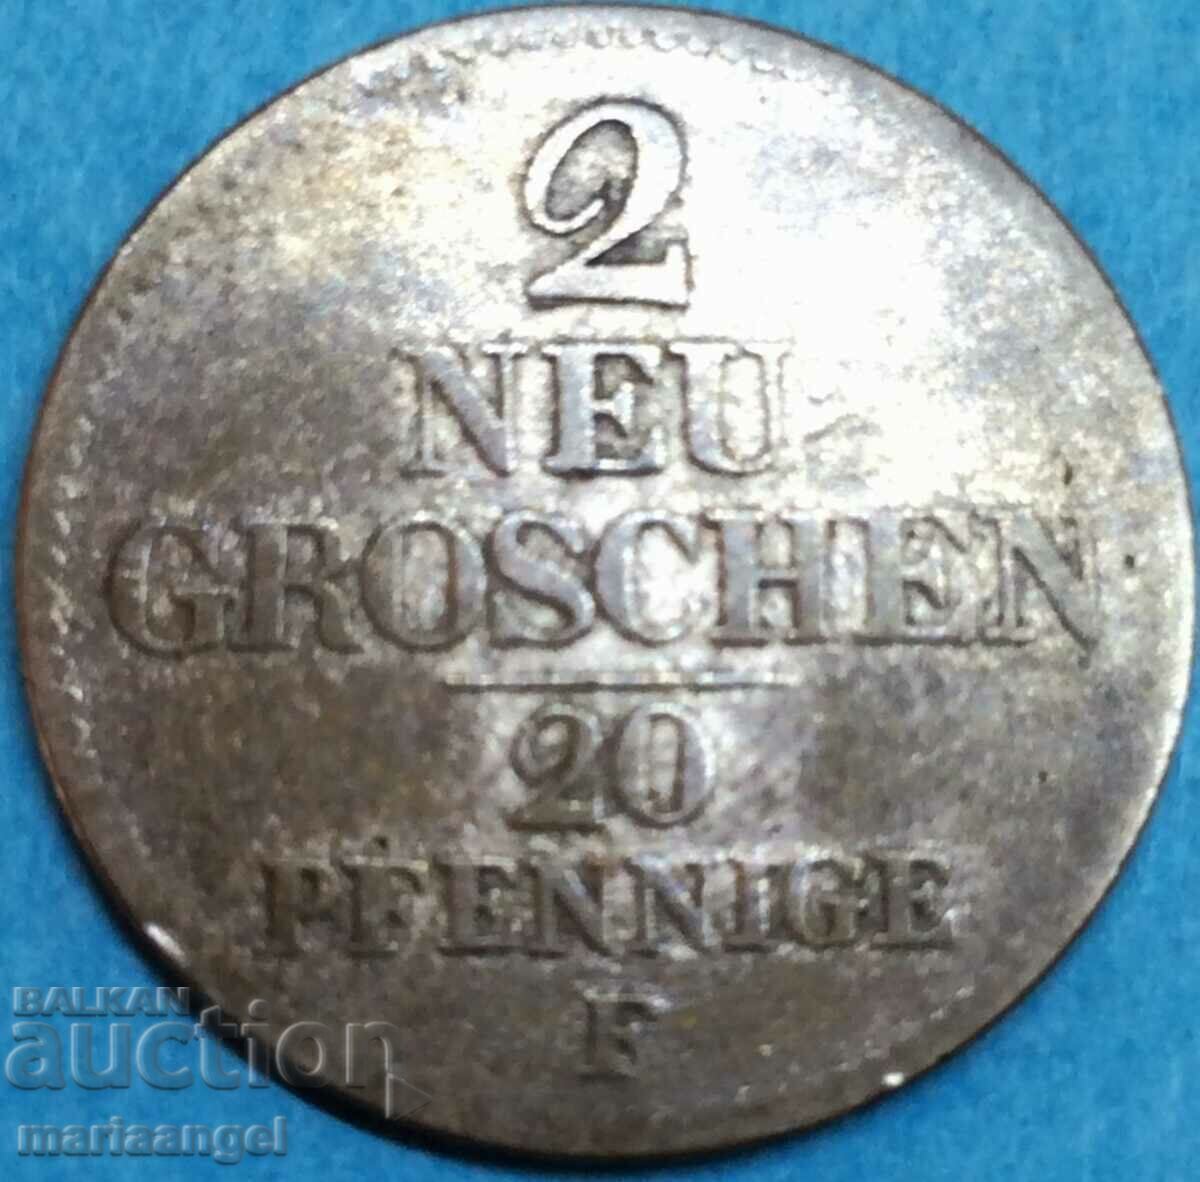 Saxony 2 new groschen 20 pfennig 1856 Germany silver